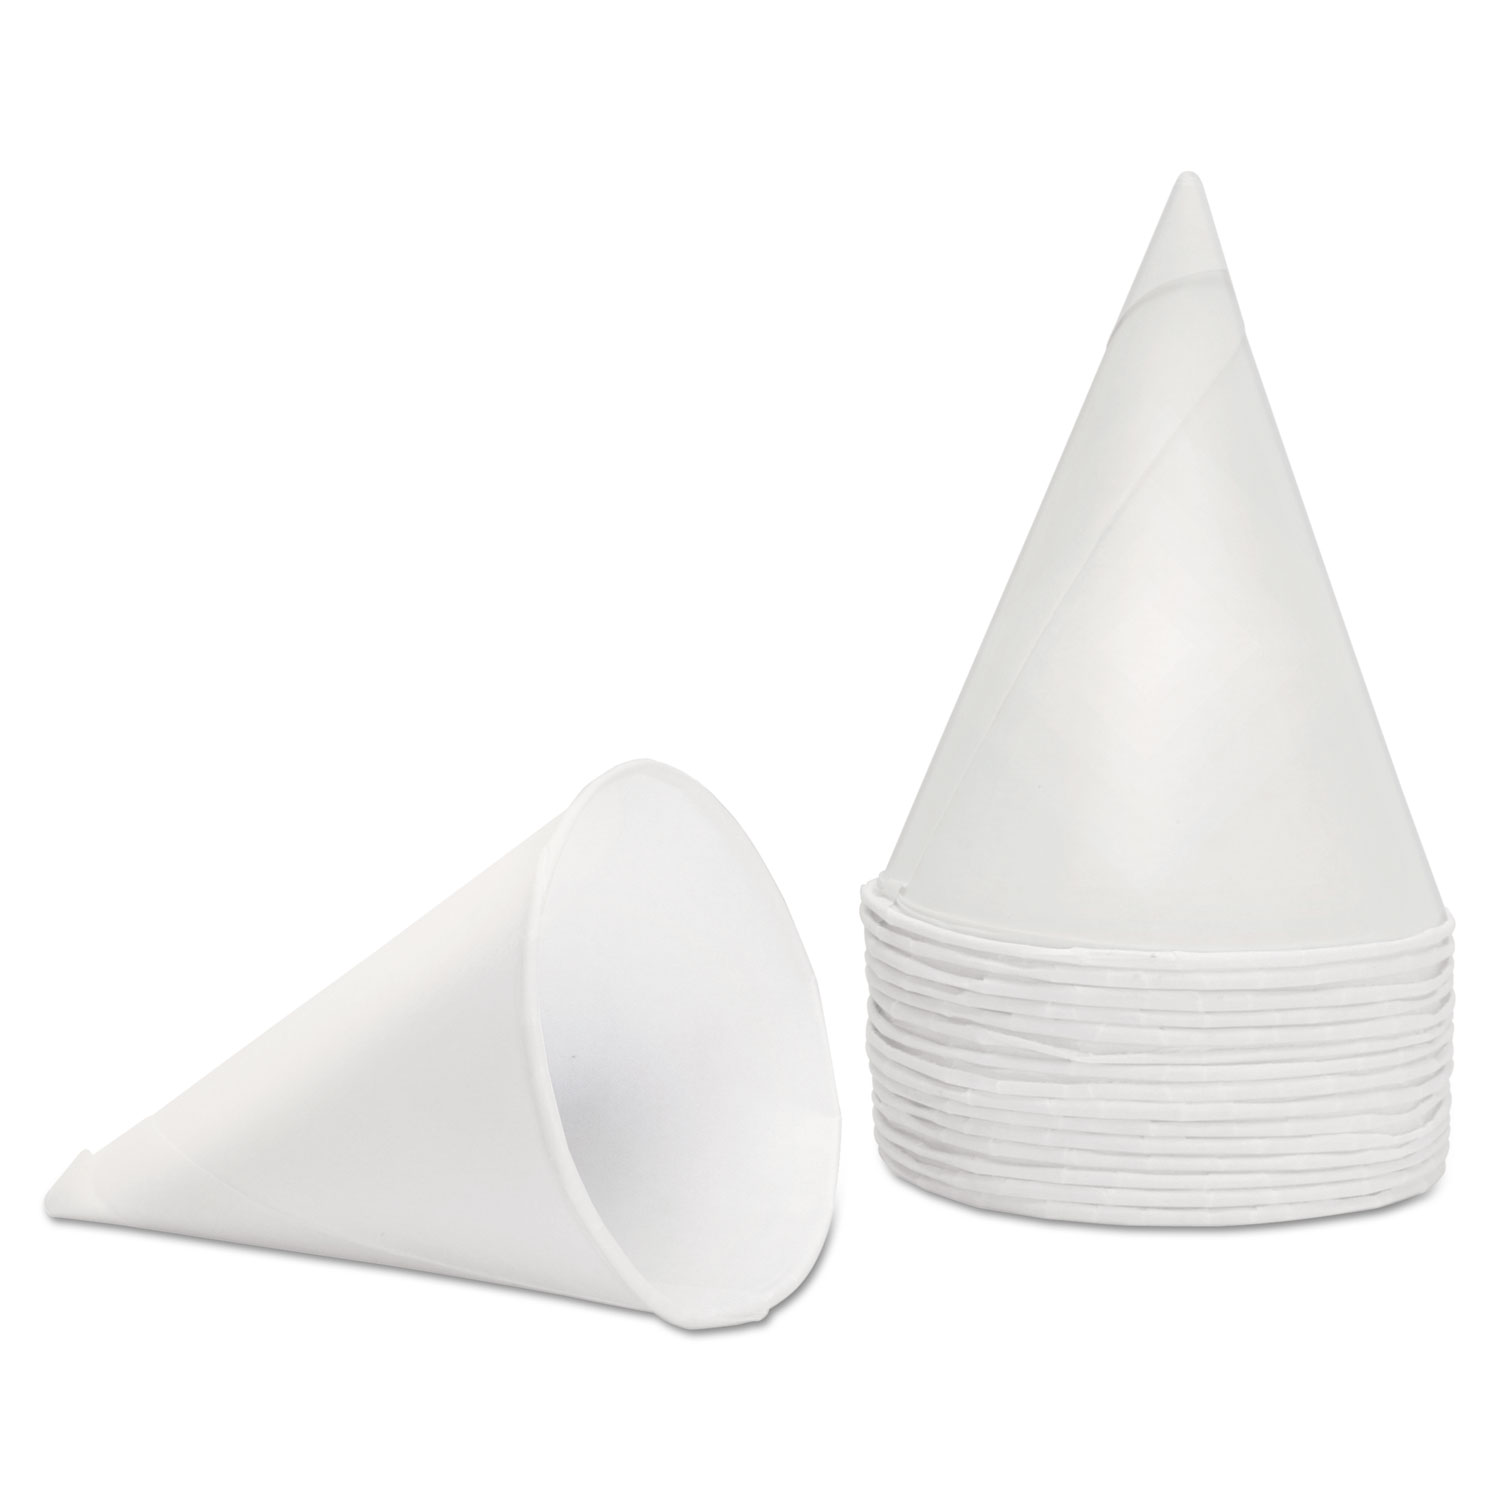  Konie KCI 45KBR Rolled Rim, Poly Bagged  Paper Cone Cups, 4.5oz, White, 5000/Carton (KCI45KBR) 